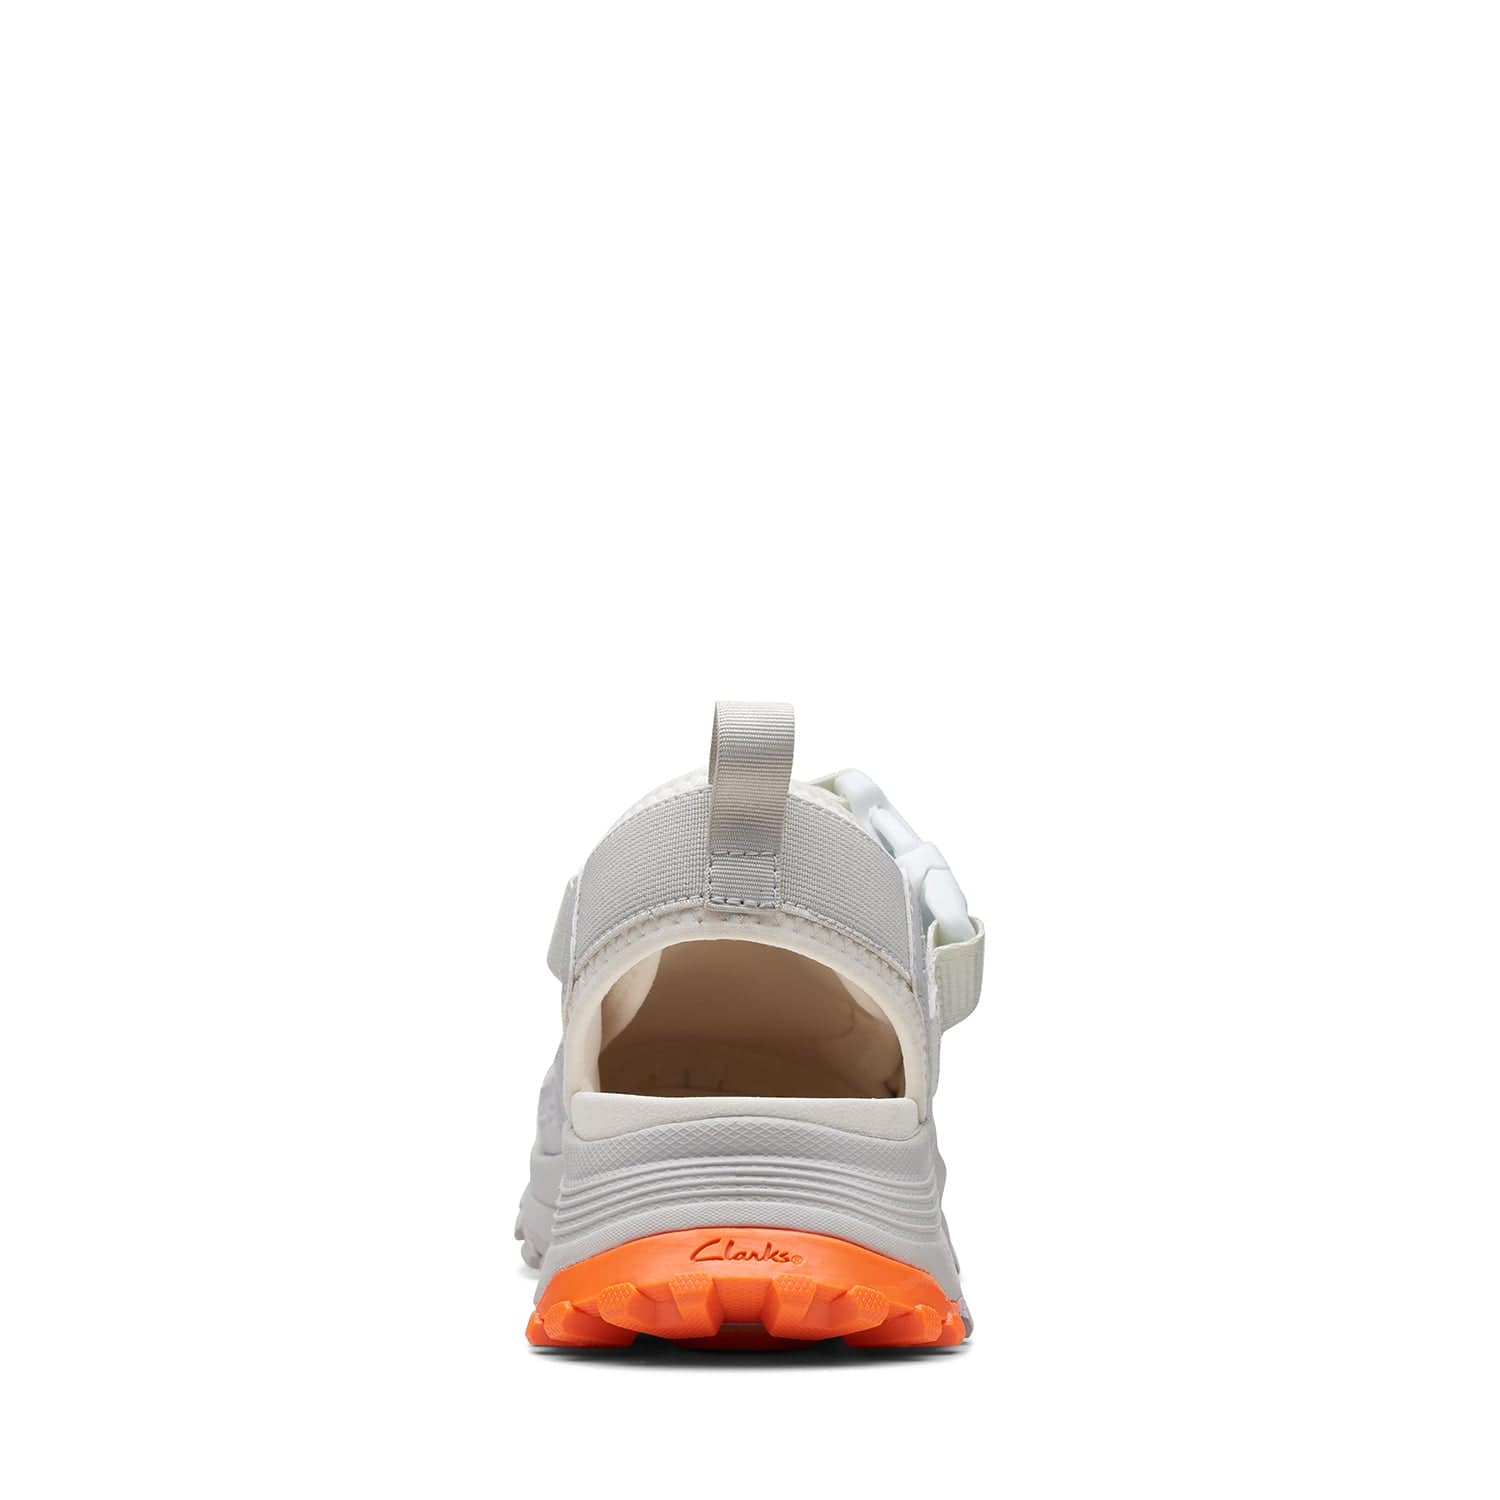 Clarks Atltrek Strap - Shoes - Light Grey Combi - 261705804 - D Width (Standard Fit)